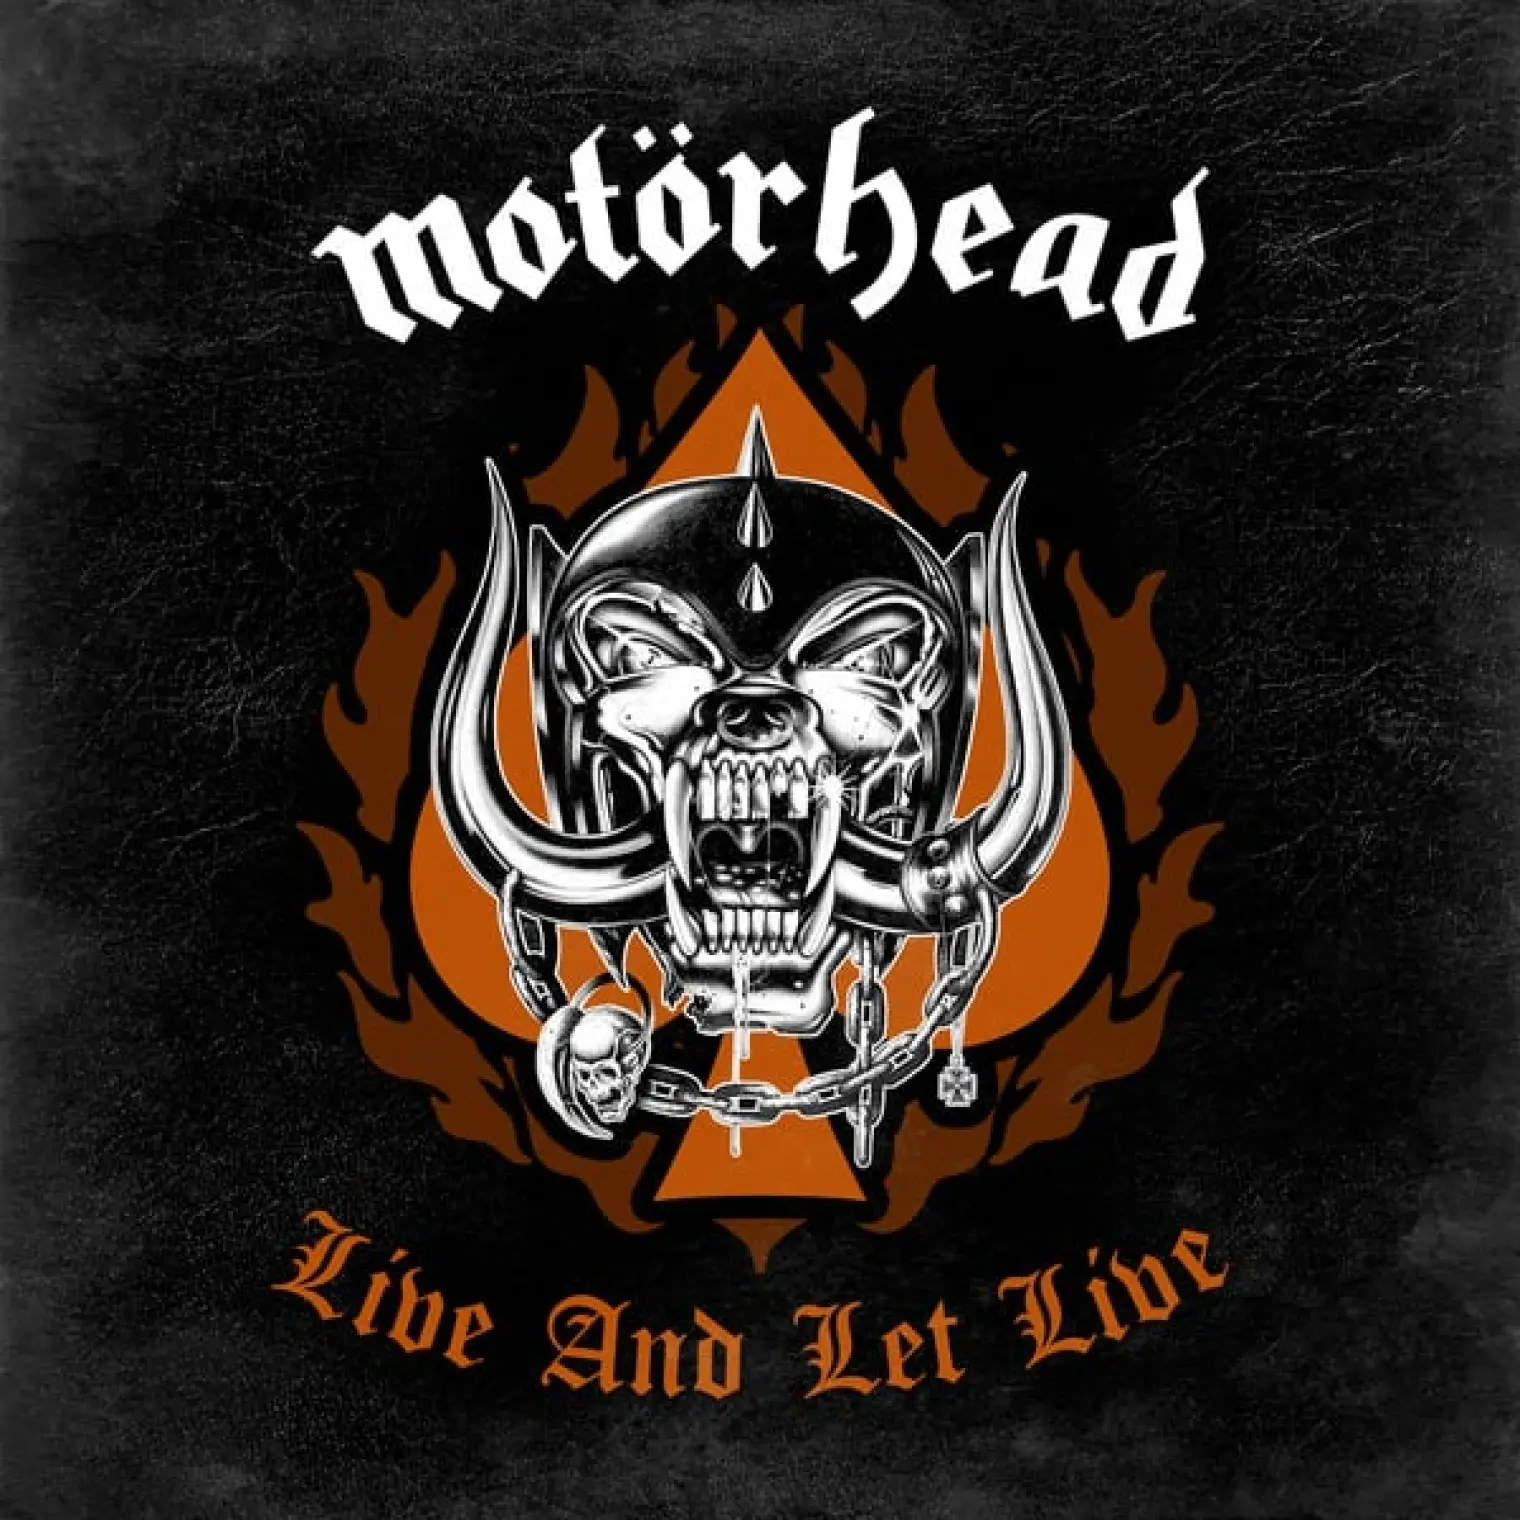 Live and Let Live -  Motörhead 